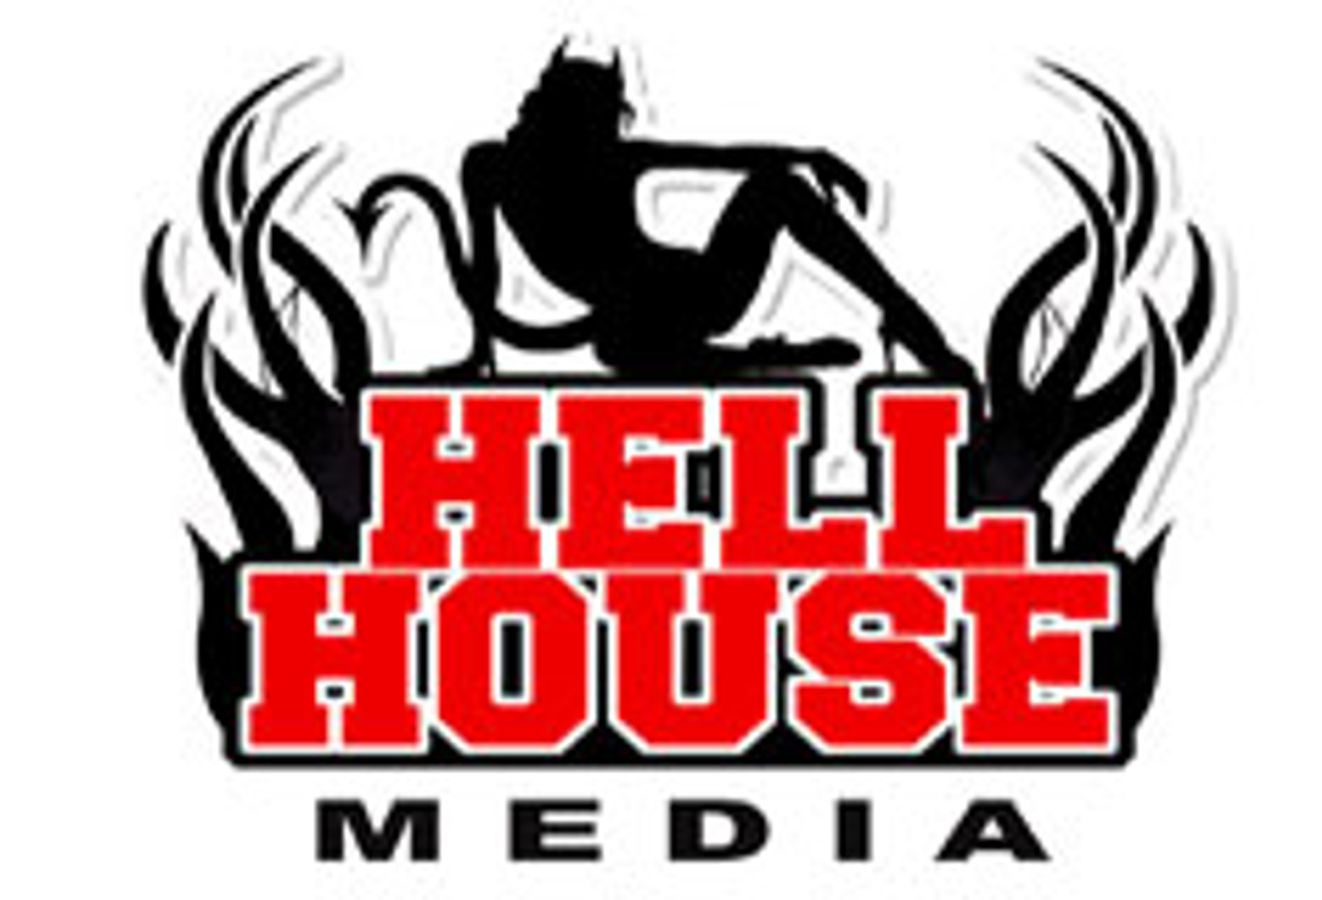 Hell House Media